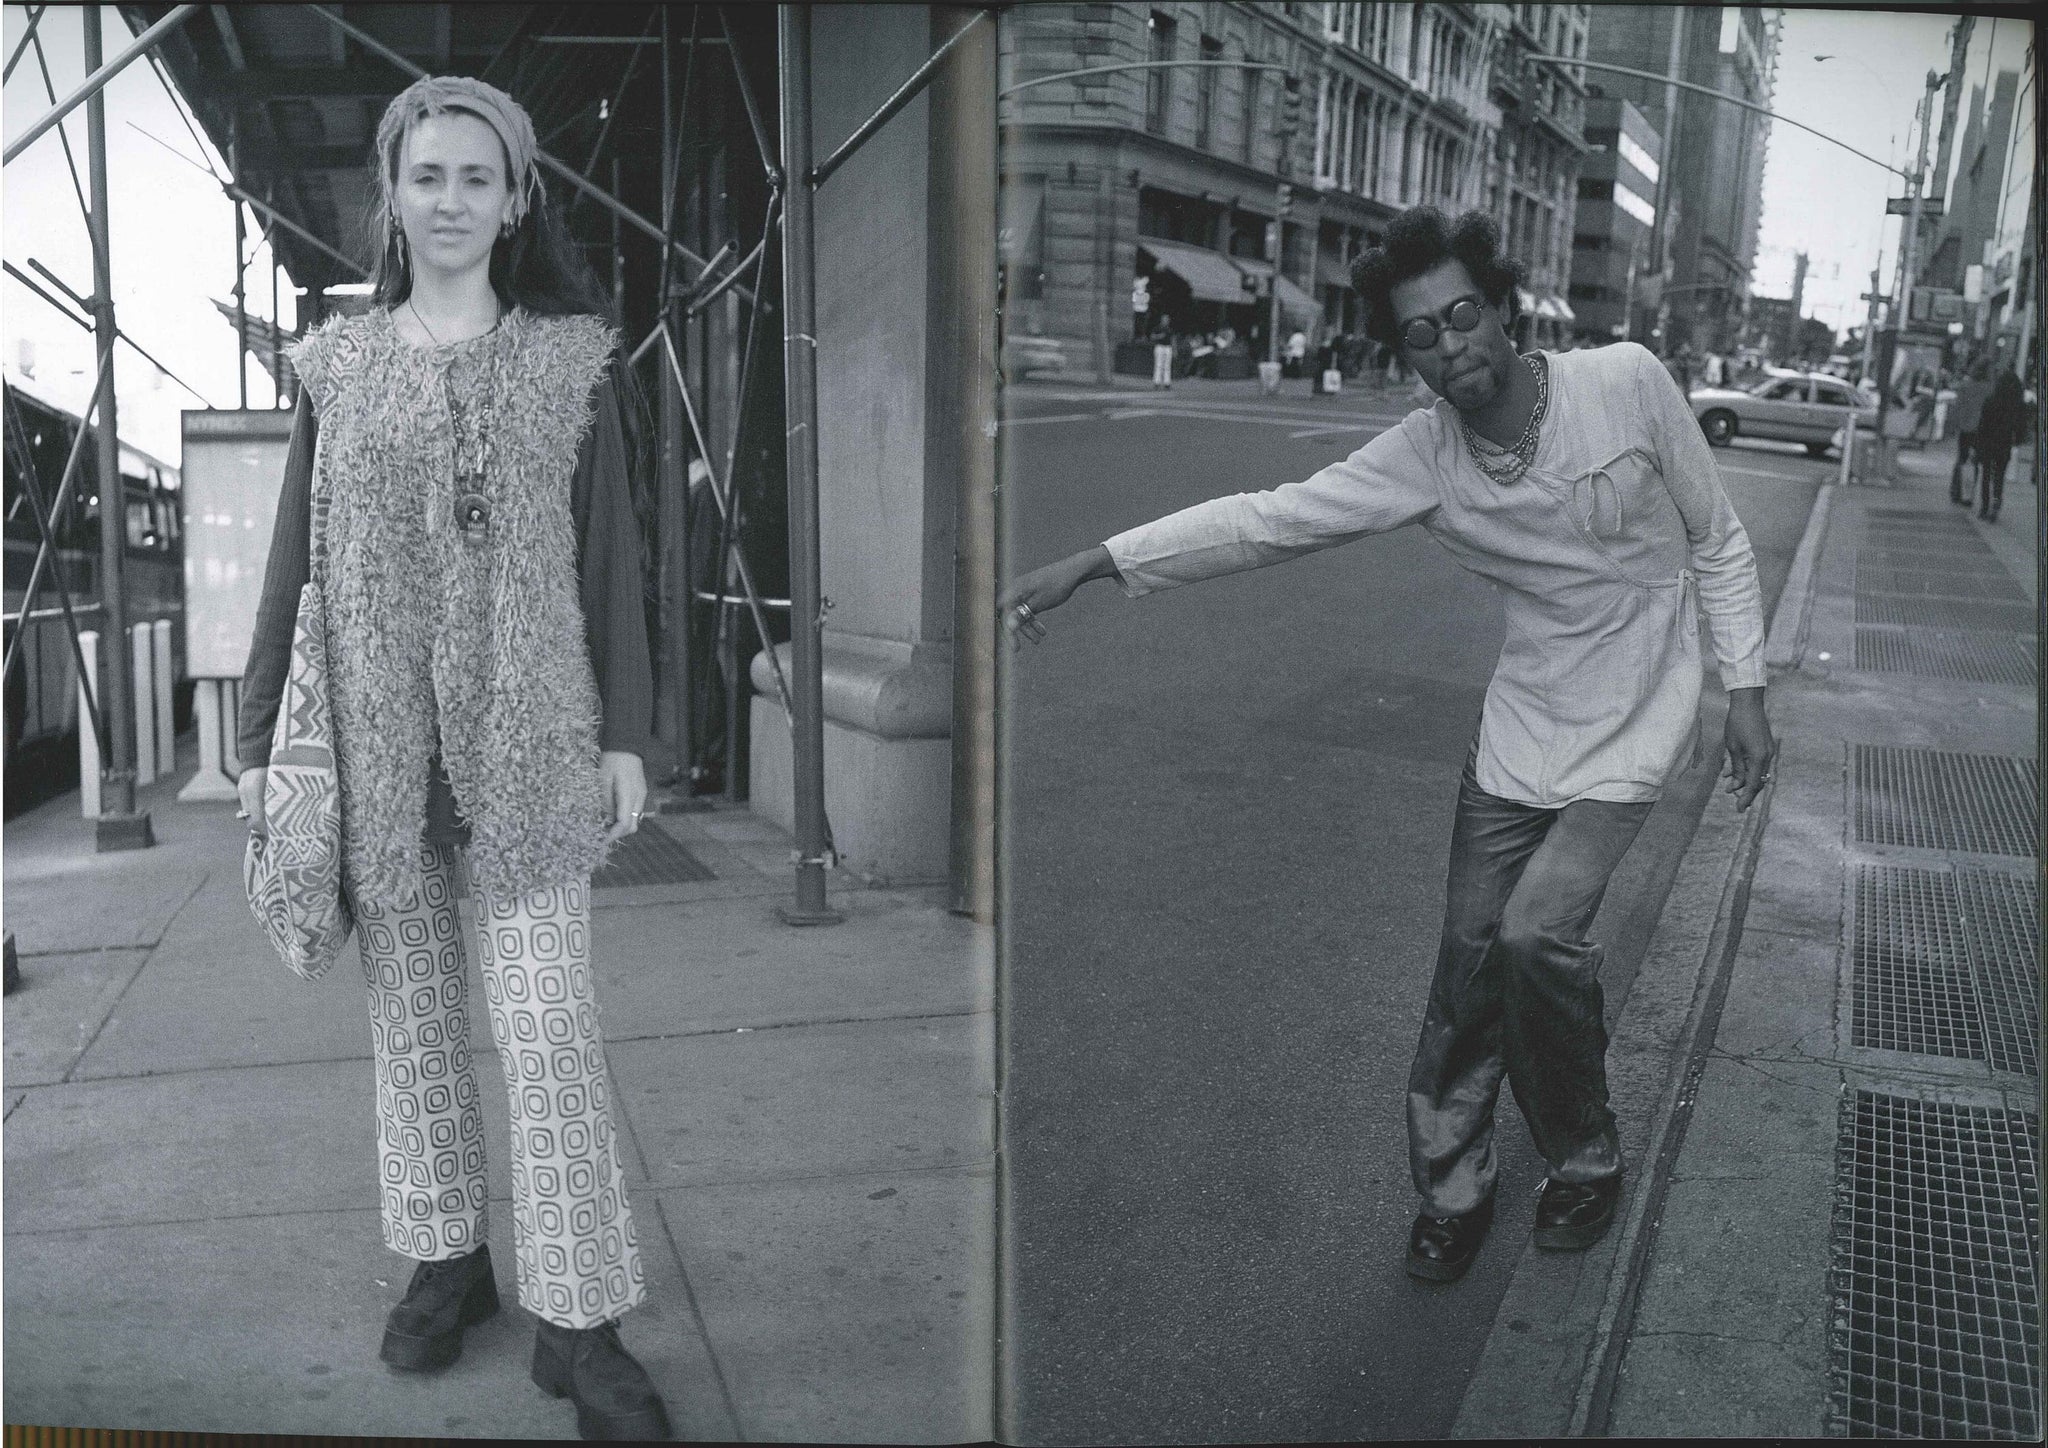 STREET magazine no. 104 / march 1998 / street fashion in new york / Shoichi Aoki